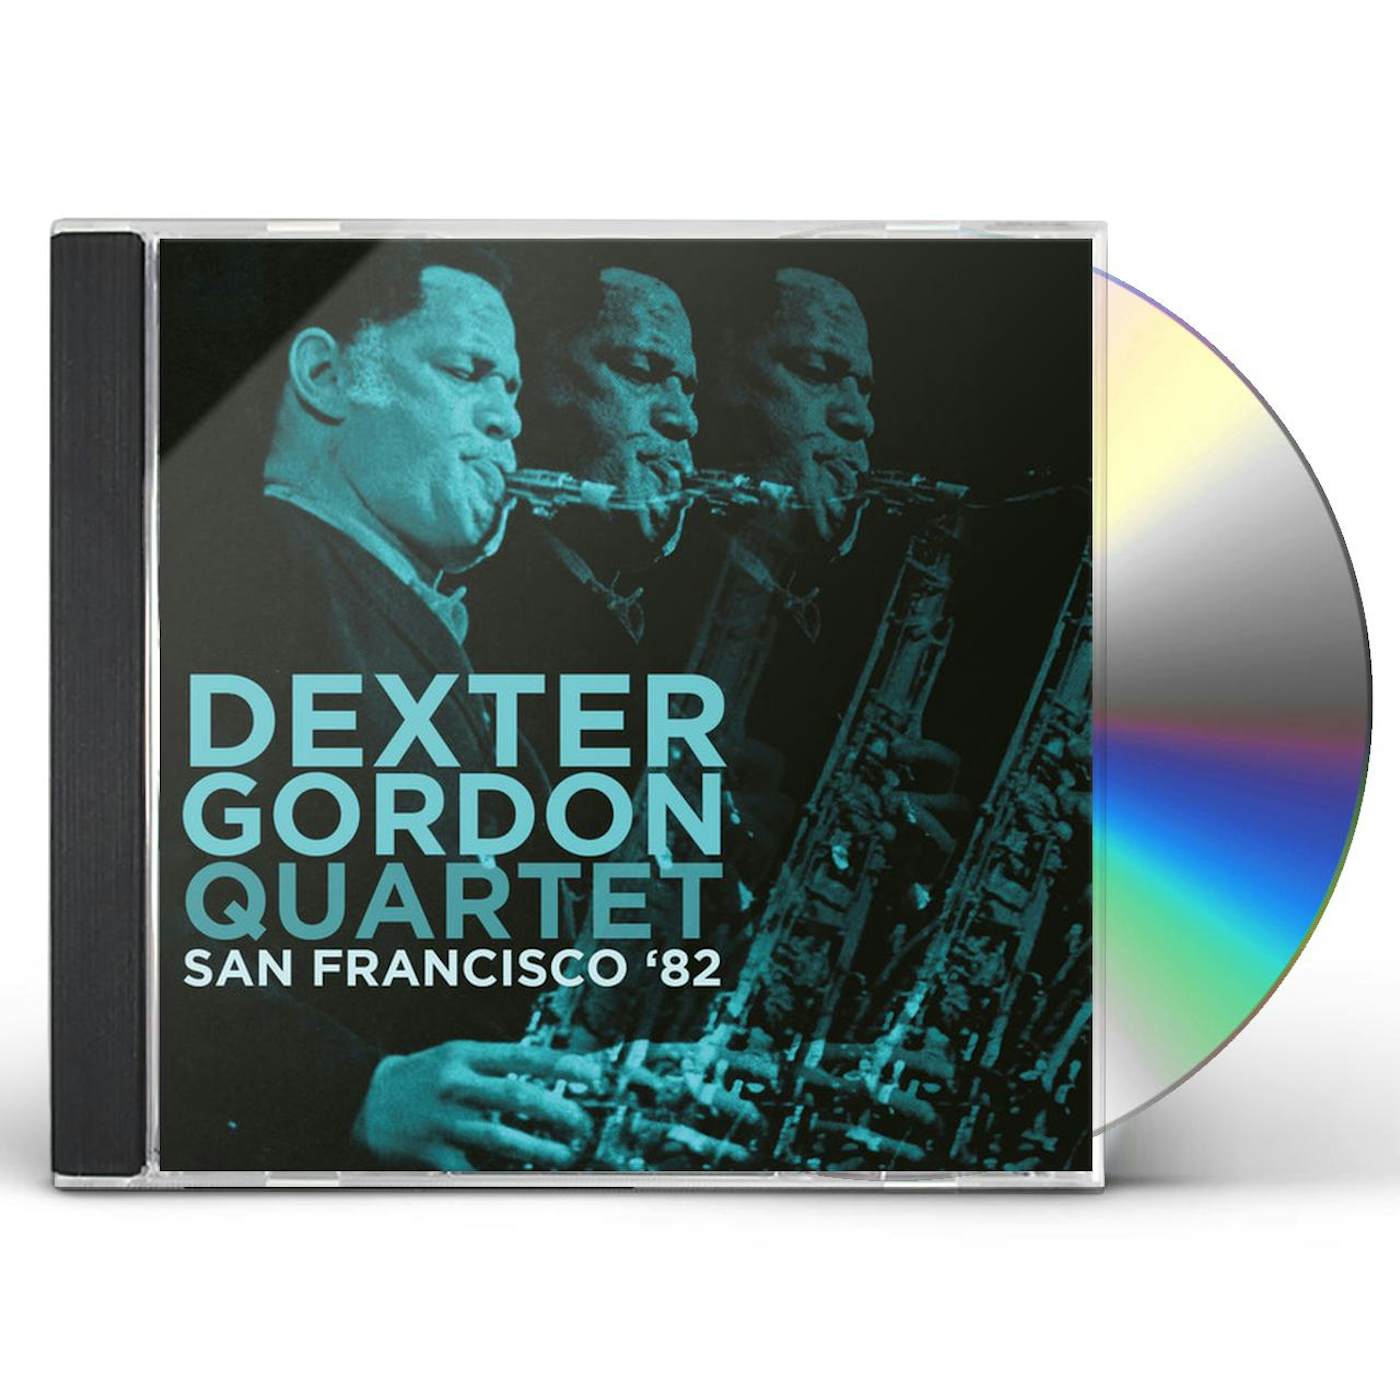 Dexter Gordon Quartet SAN FRANCISCO '82 CD